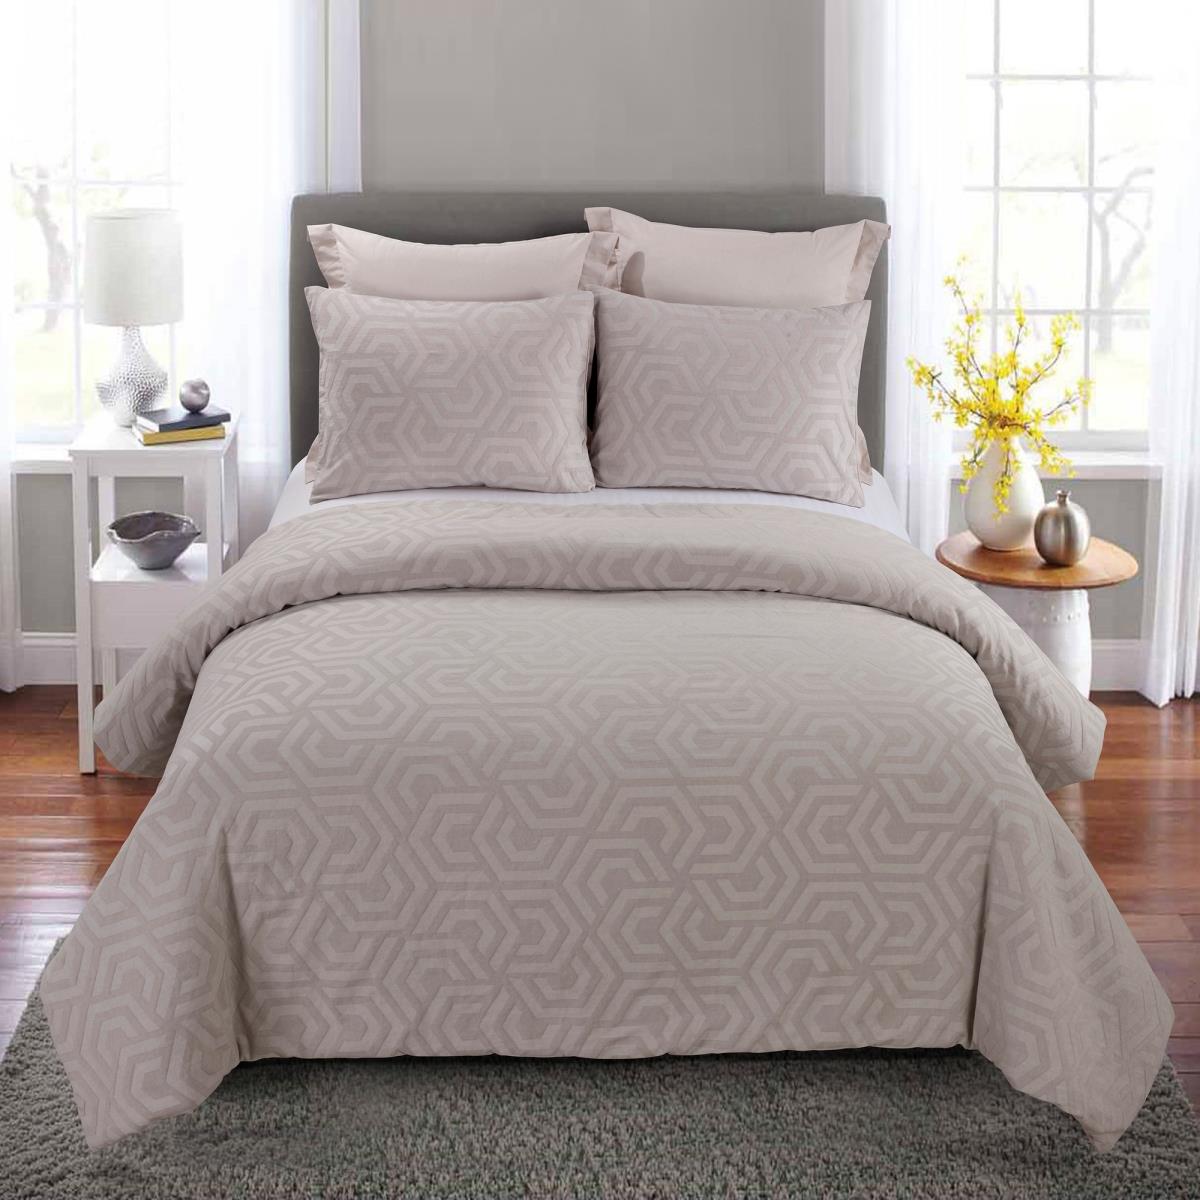 Y00712 Queen Size Comforter Set - Seville Blush